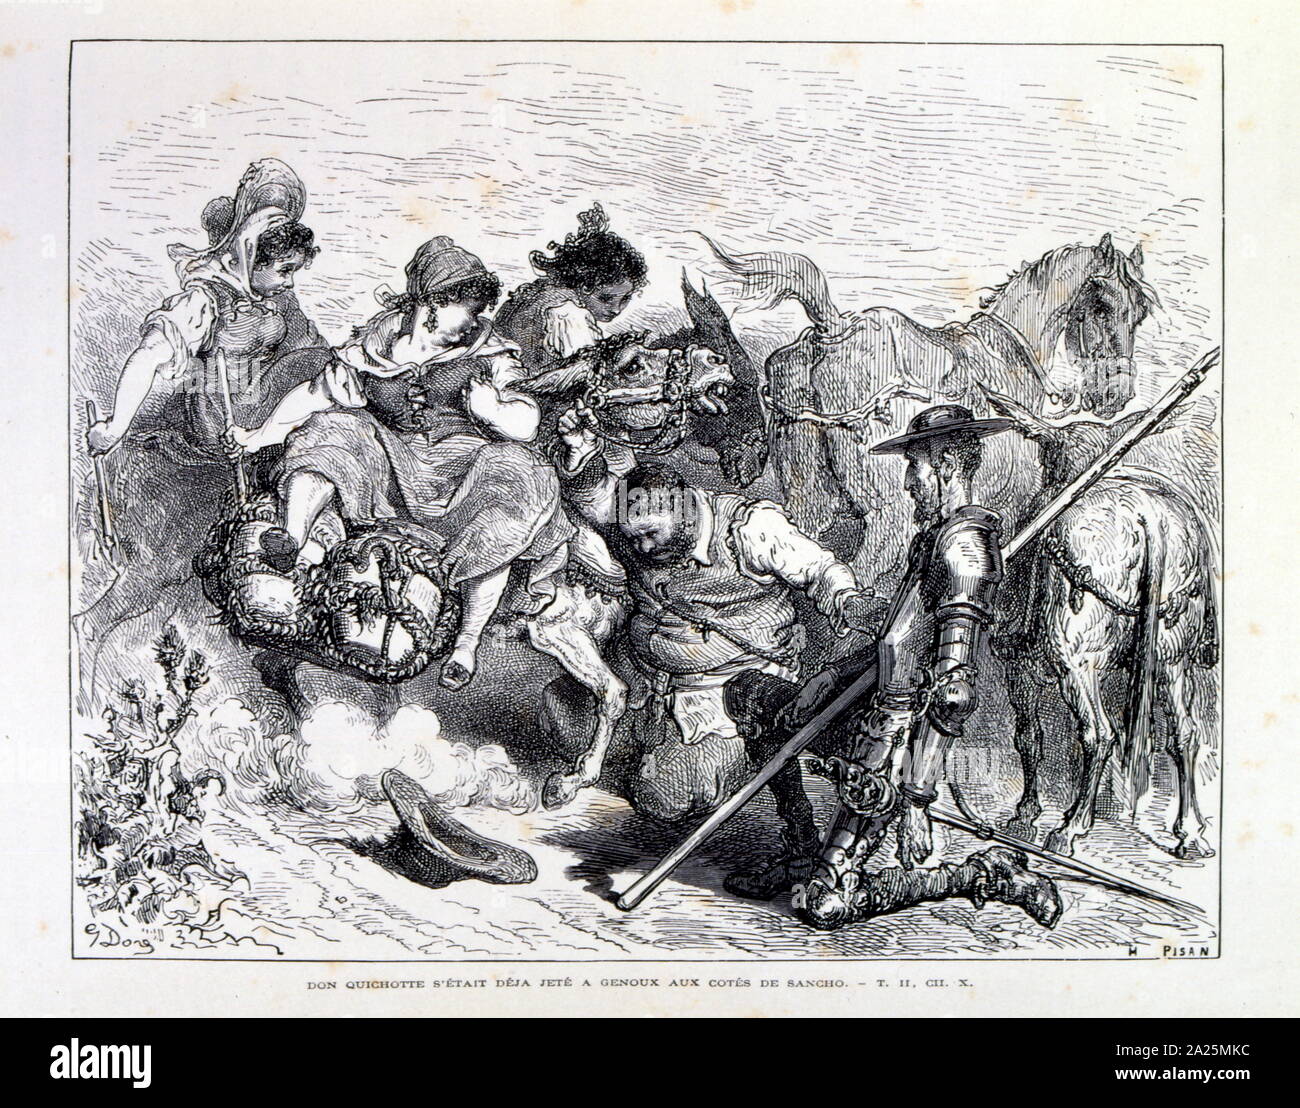 1868 edition of Miguel de Cervantes' Don Quixote with illustrations by Gustave Doré Stock Photo